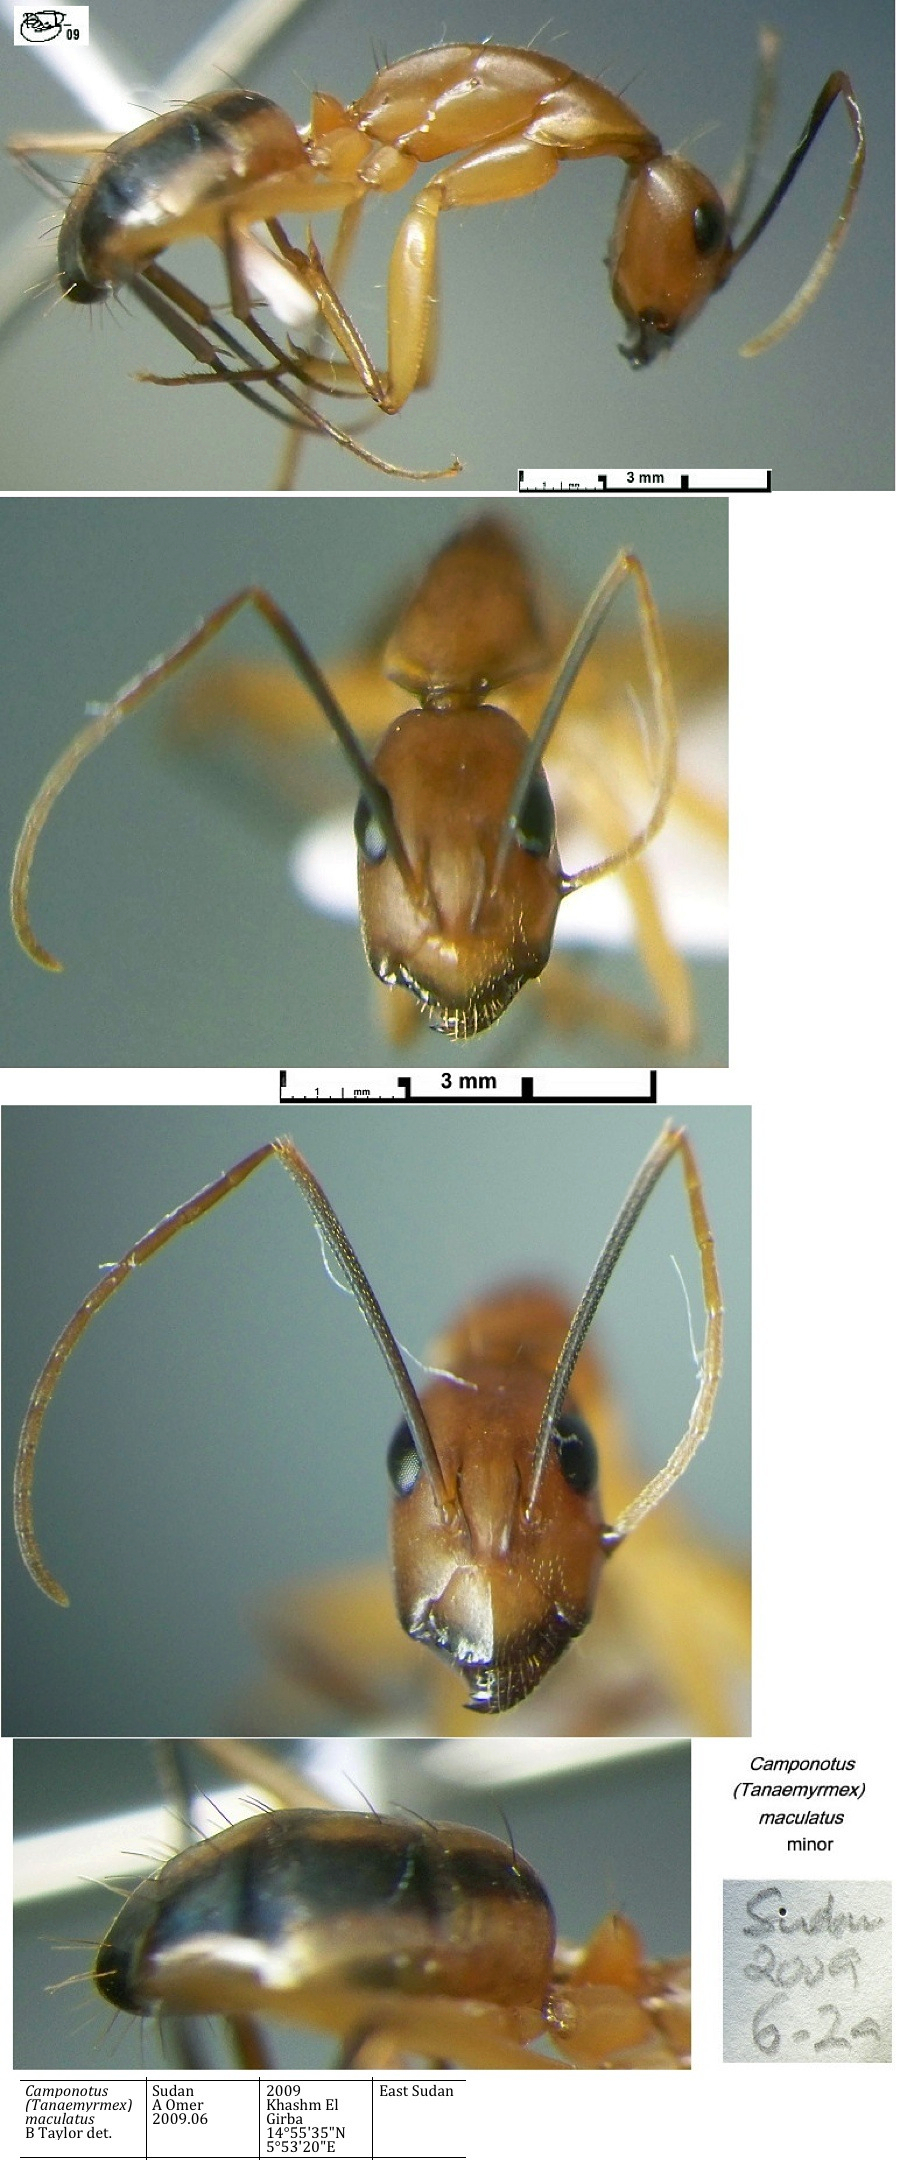 {Camponotus maculatus minor Sudan}